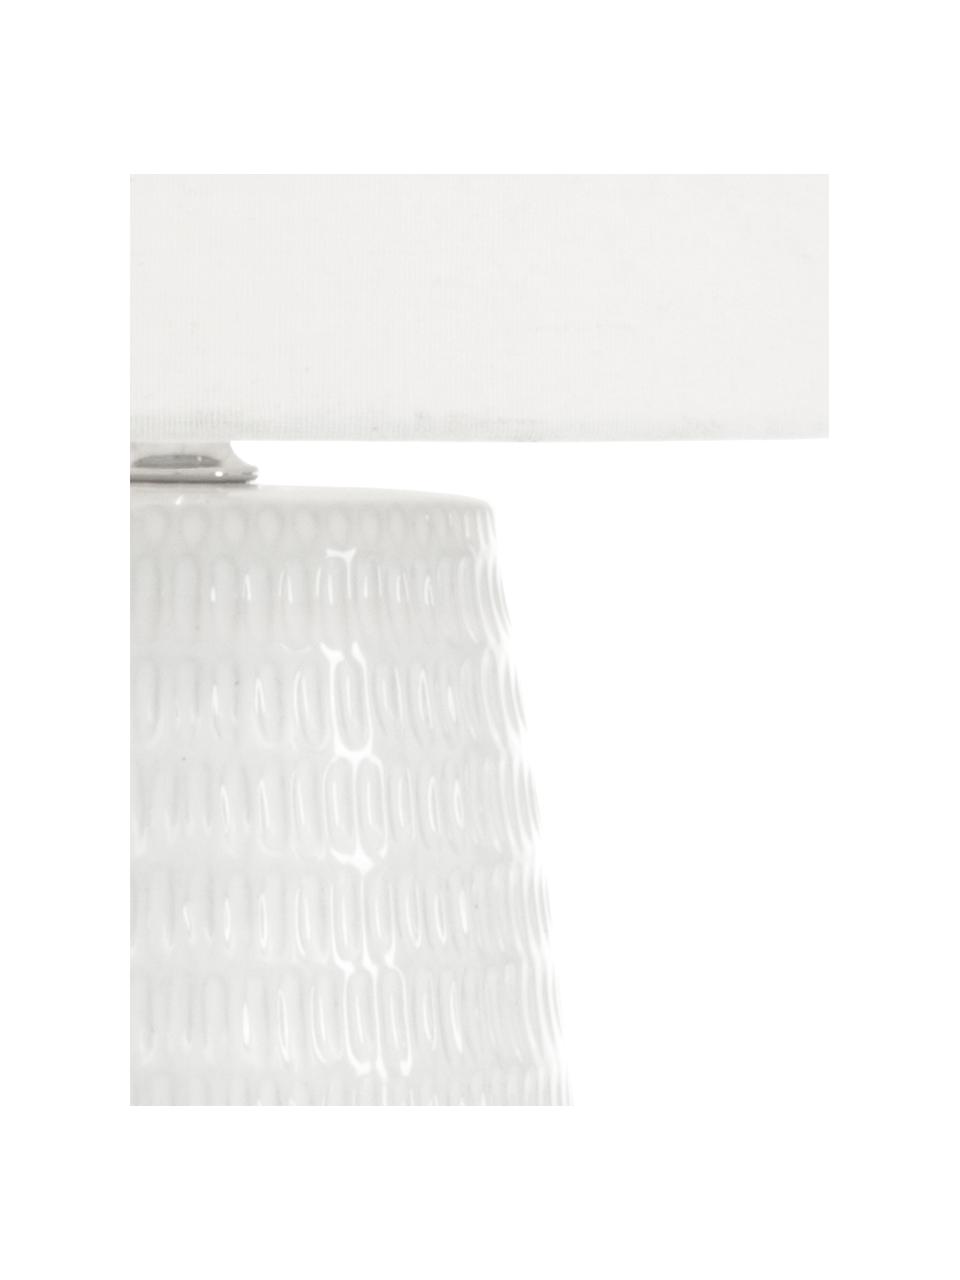 Keramik-Tischlampe Mona, Lampenschirm: Textil, Lampenfuß: Keramik, Weiß, Ø 28 x H 45 cm